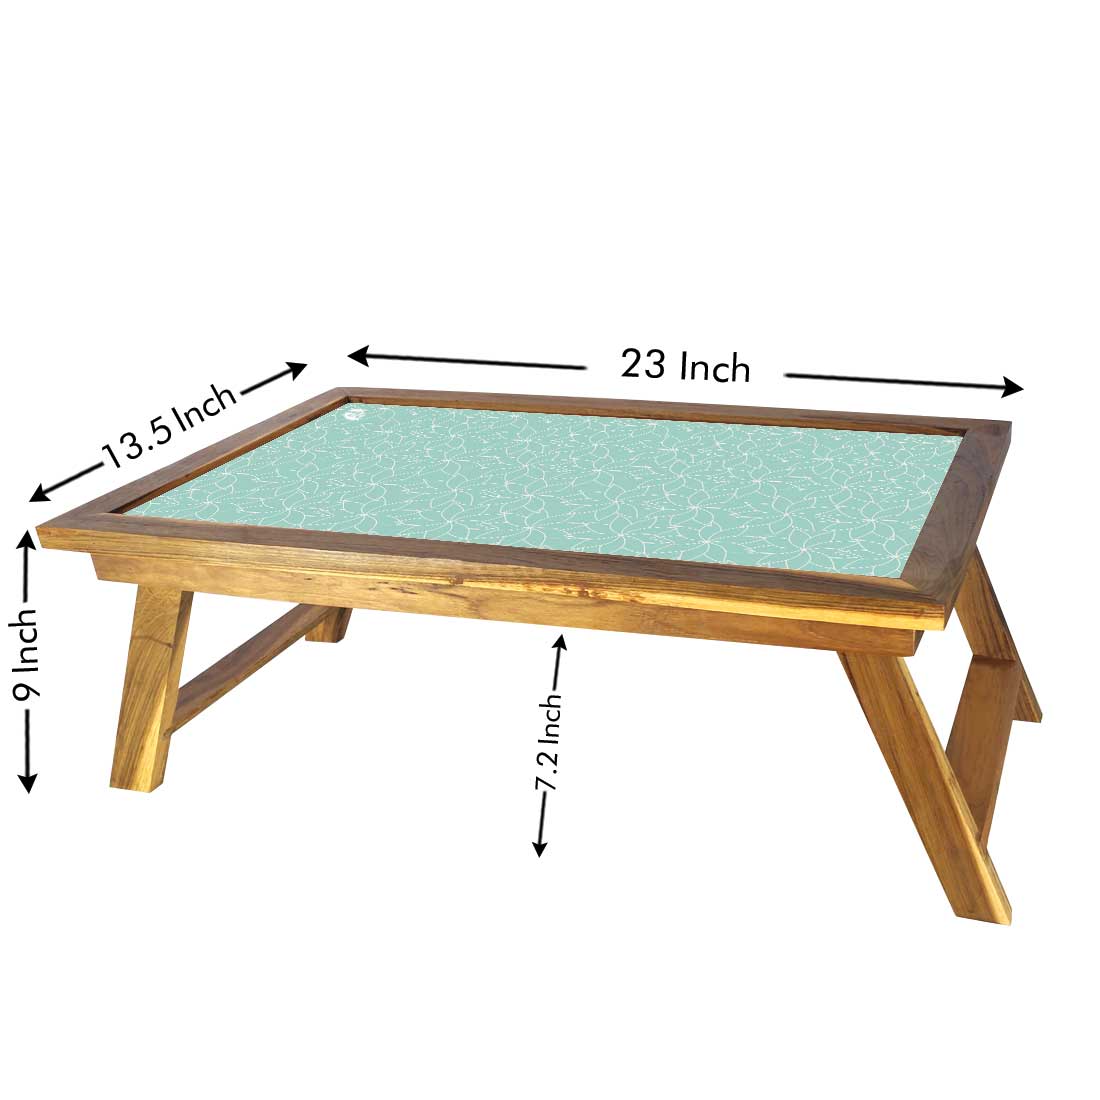 Nutcase Folding Laptop Table For Home Bed Lapdesk Breakfast Table Foldable Teak Wooden Study Desk - Flower Pattern Design Nutcase